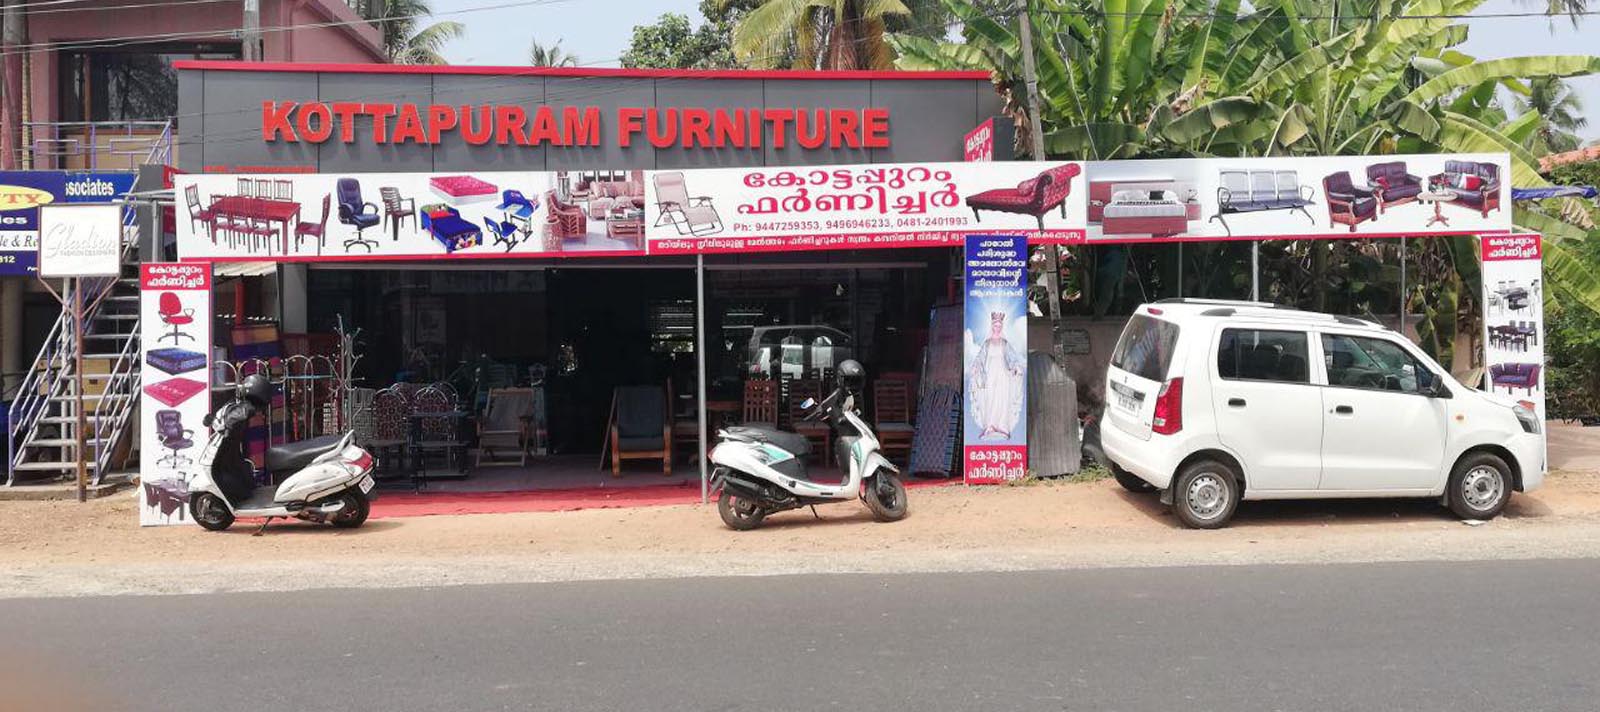 wooden furniture Kottapuram funiture shop in changanacherry